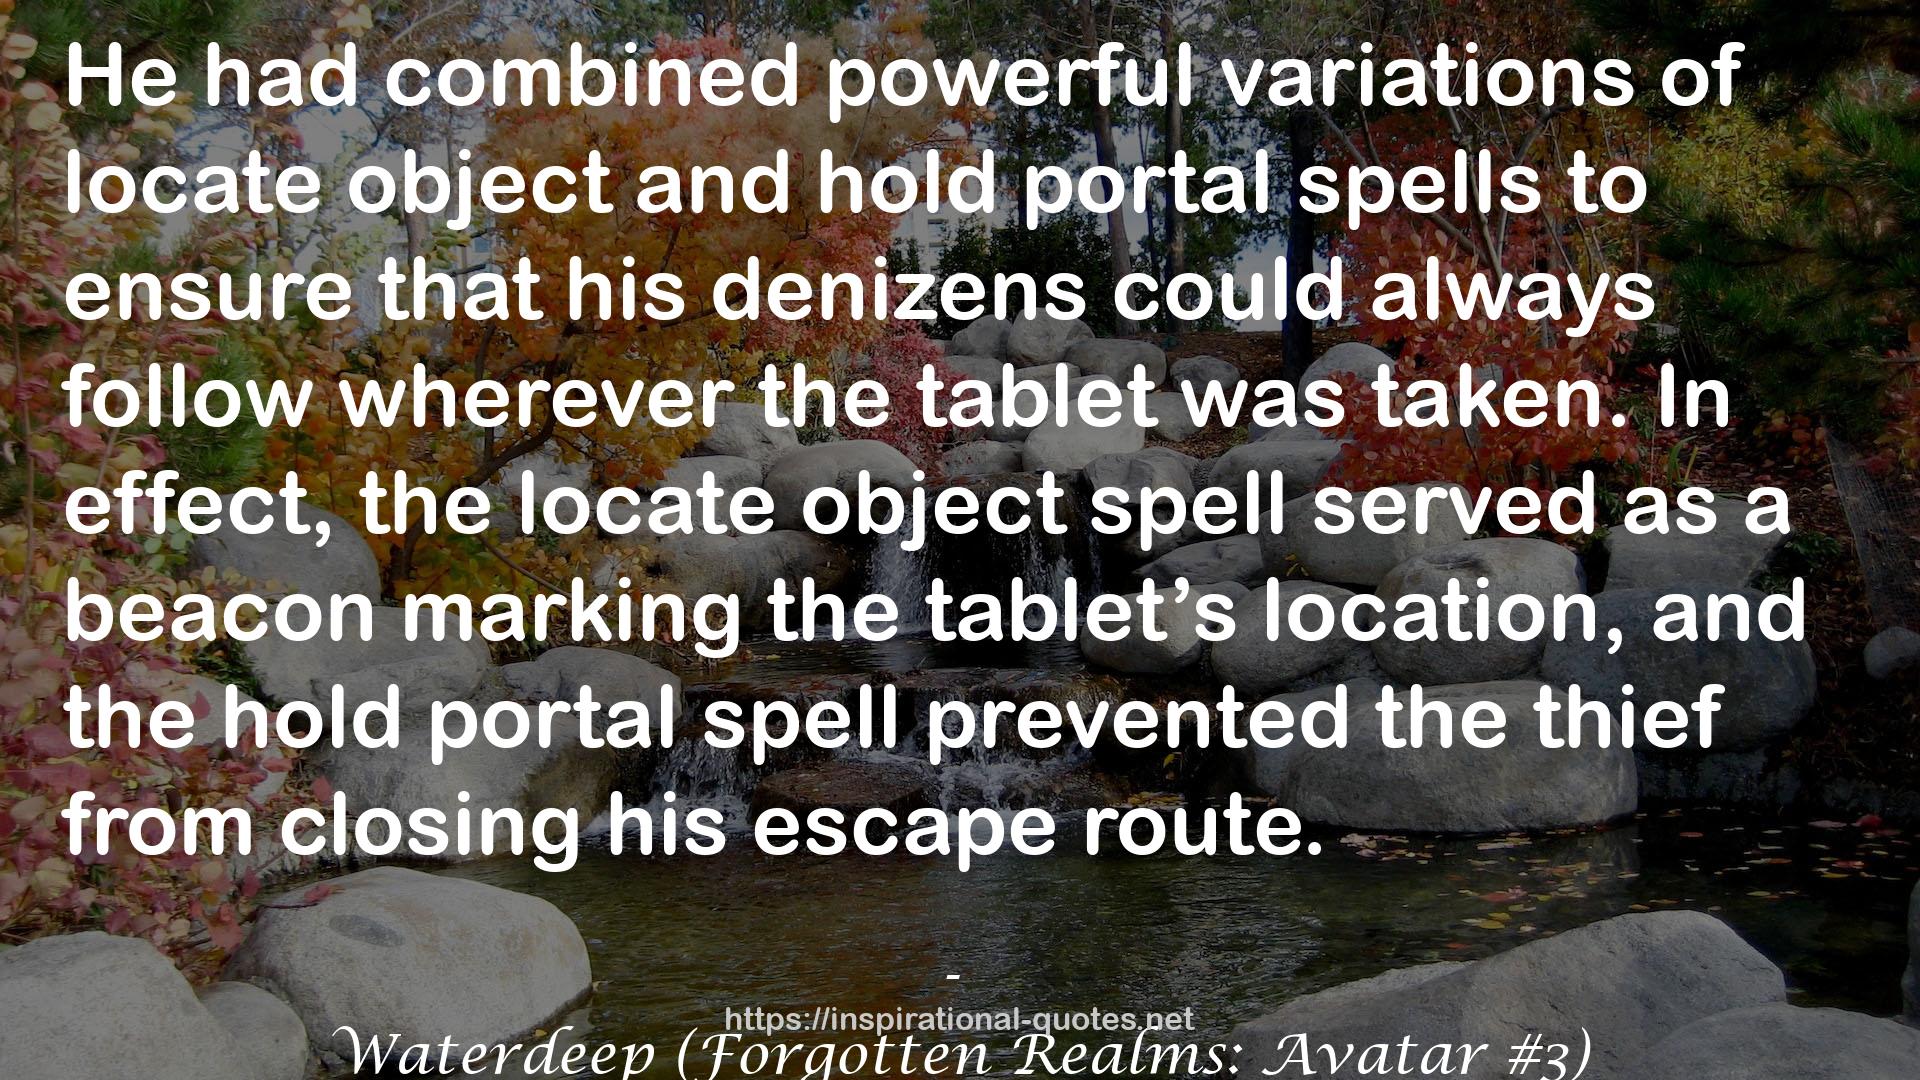 Waterdeep (Forgotten Realms: Avatar #3) QUOTES